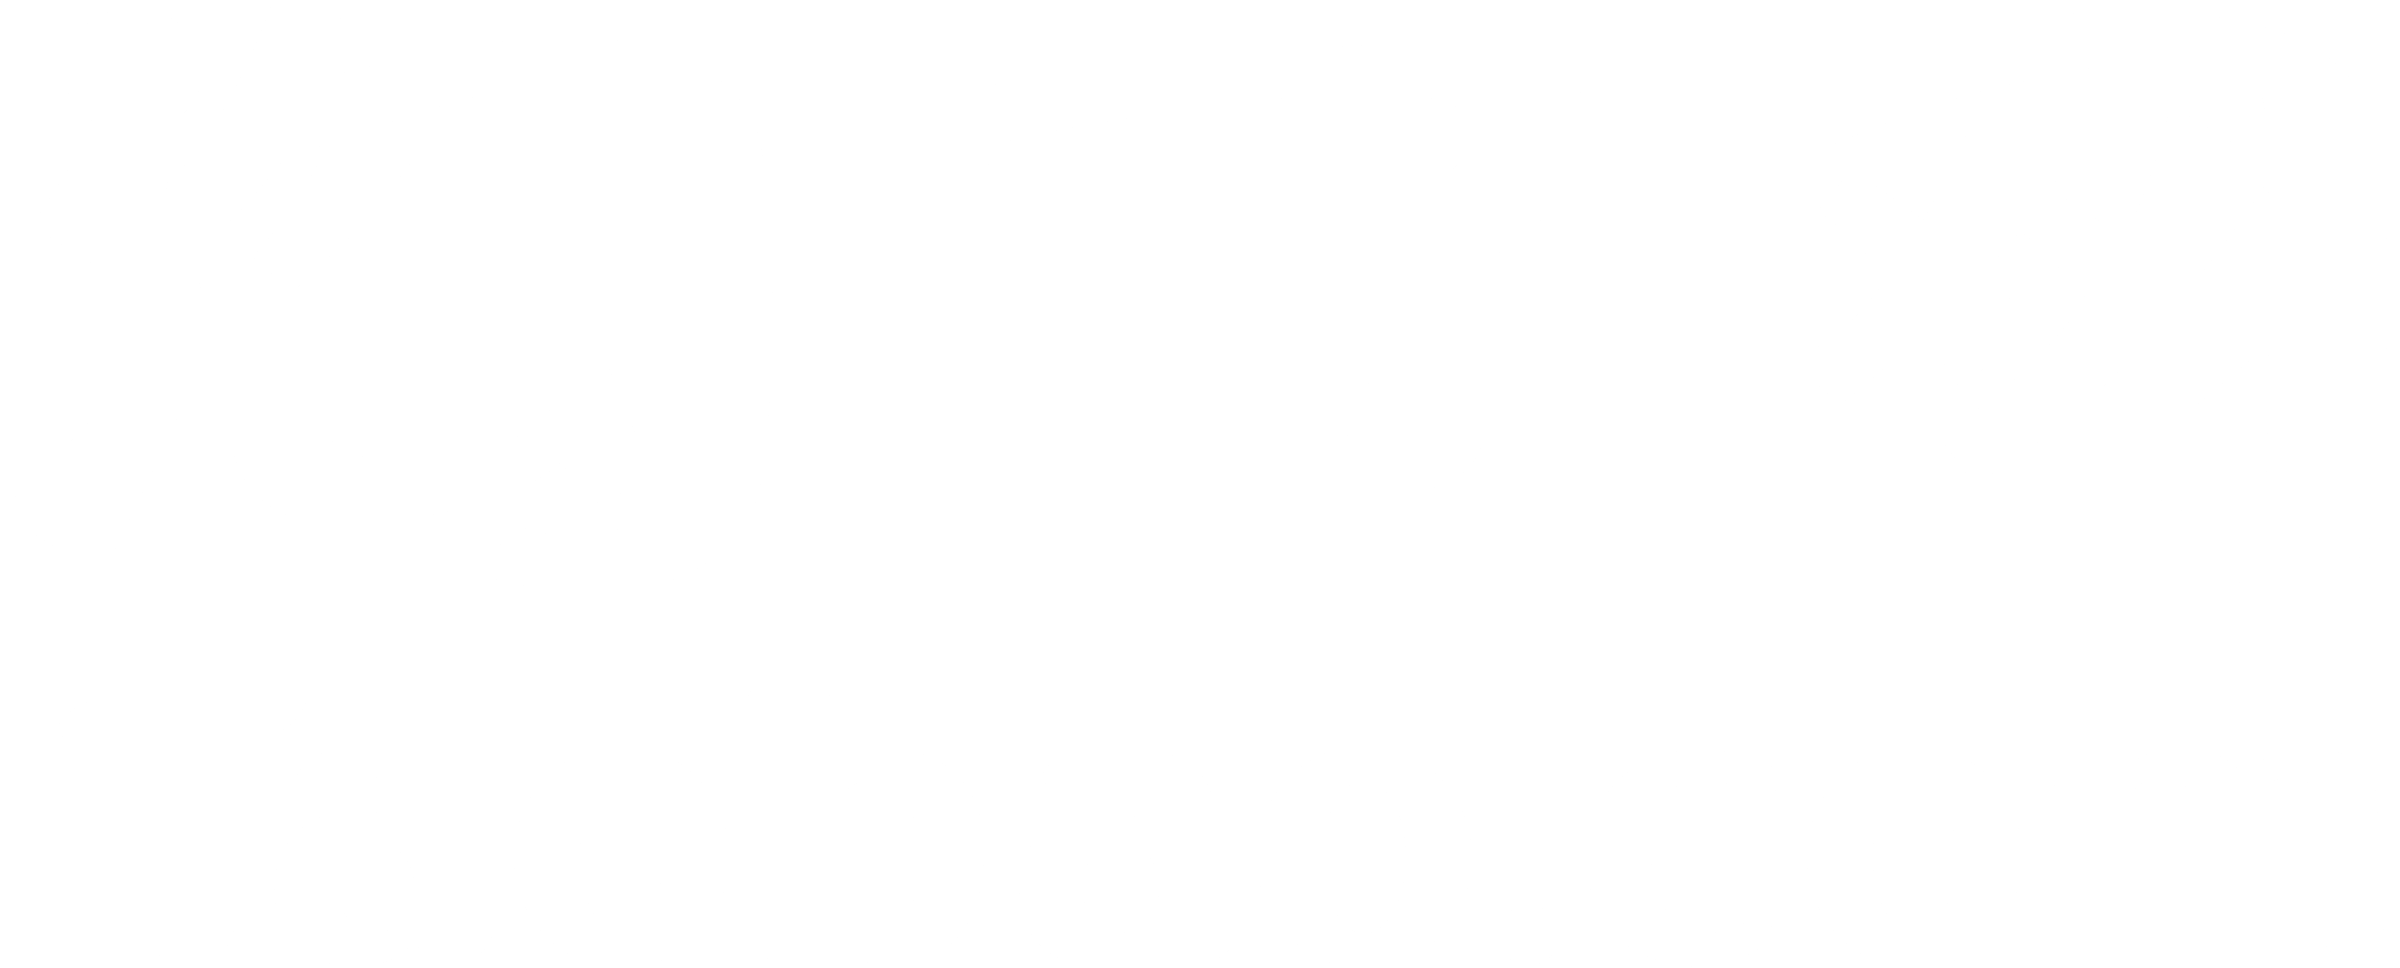 Taobao Logo - Taobao Logo PNG Transparent & SVG Vector - Freebie Supply